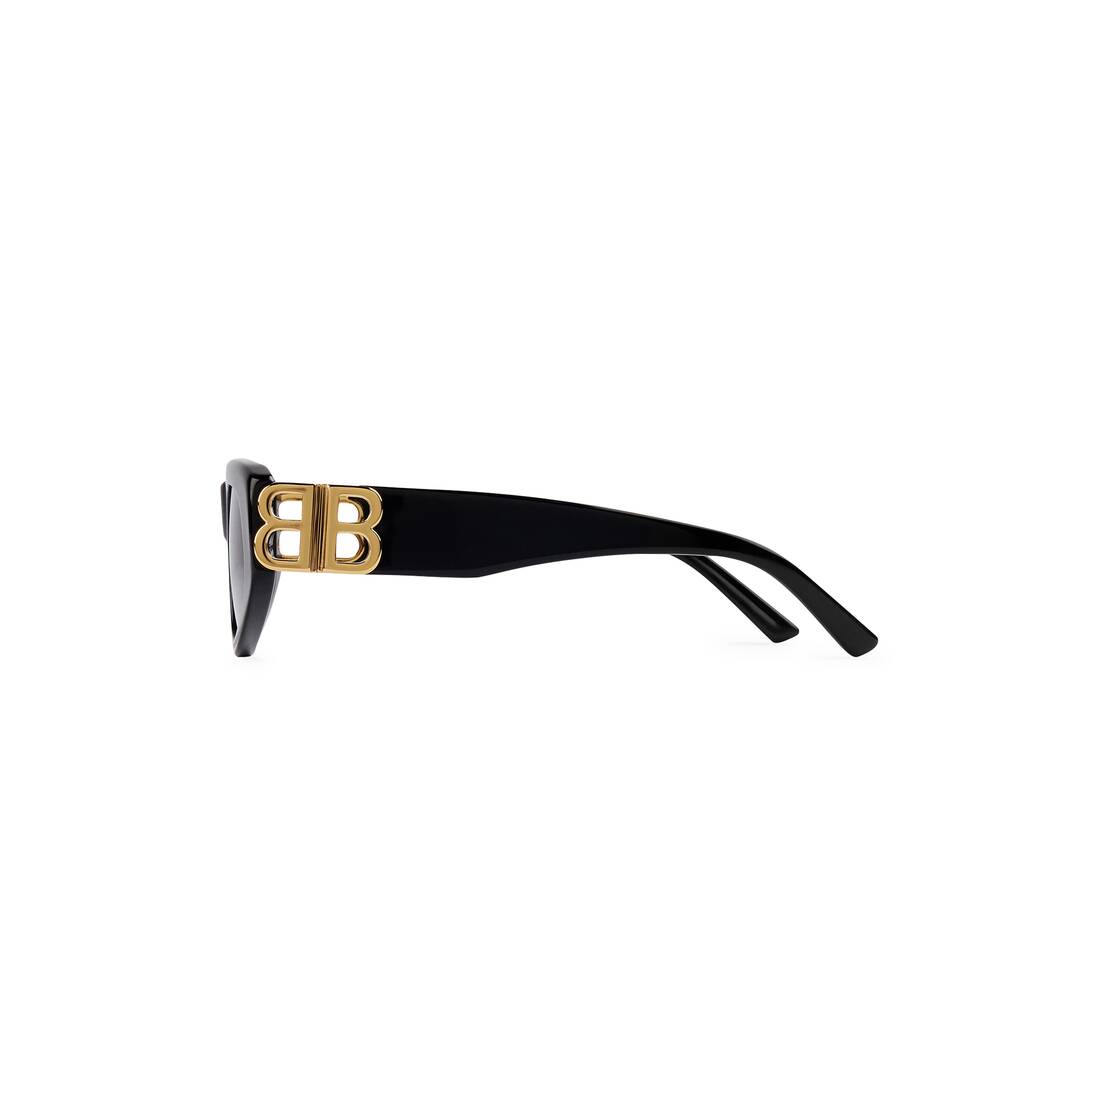 Dynasty D-frame Sunglasses in Black